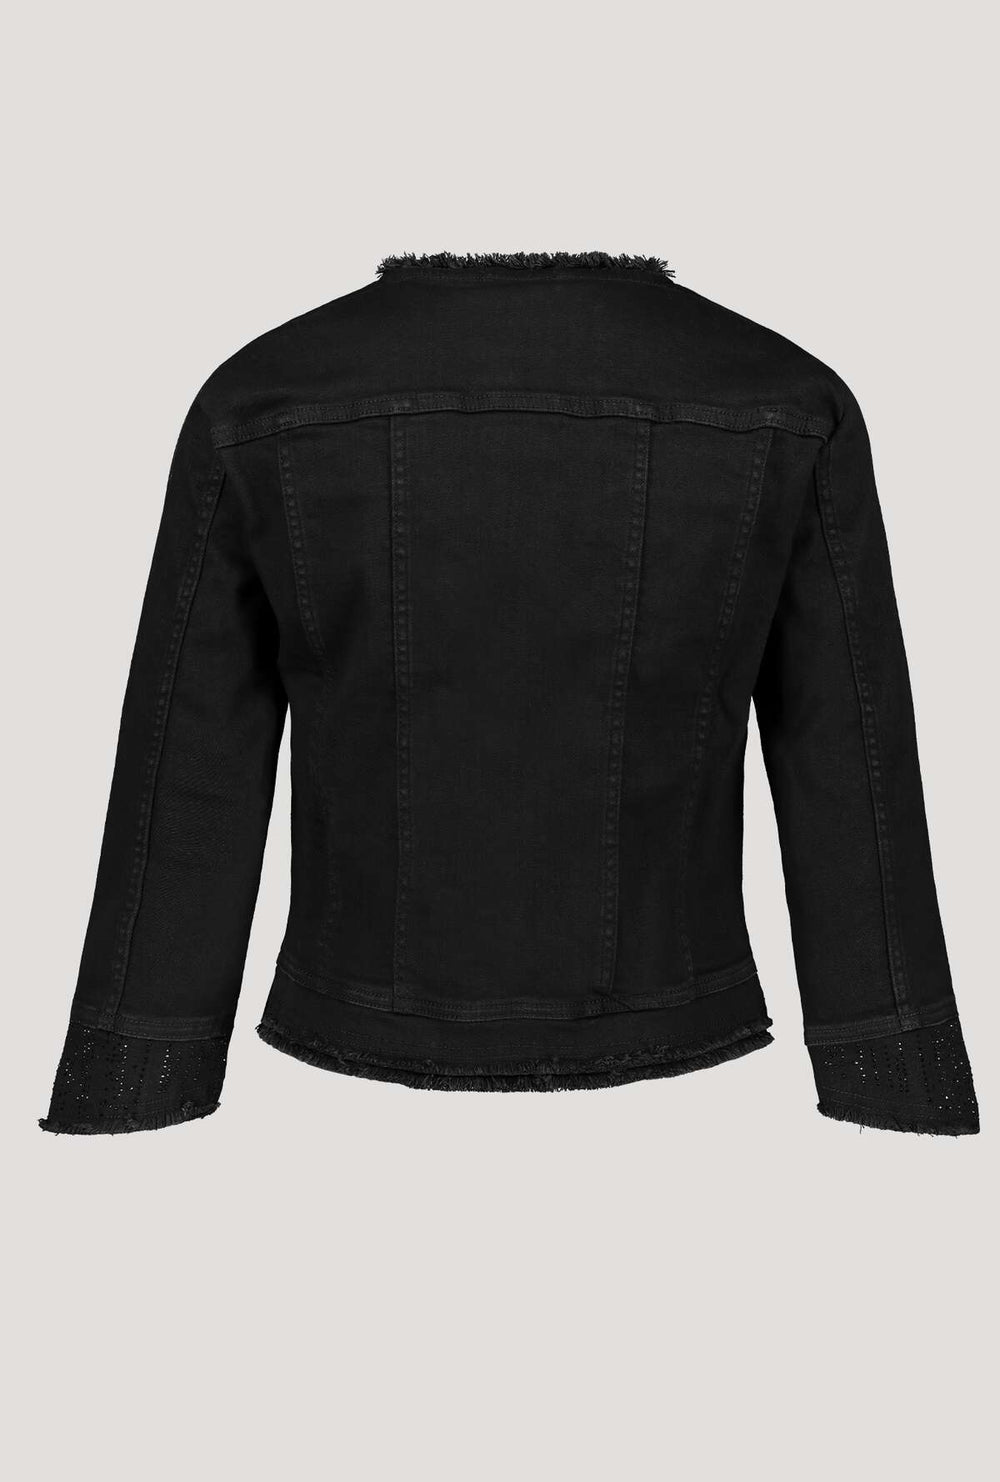 Monari 406580 Short Black Denim Jacket 3/4 Sleeves Back | Dotique